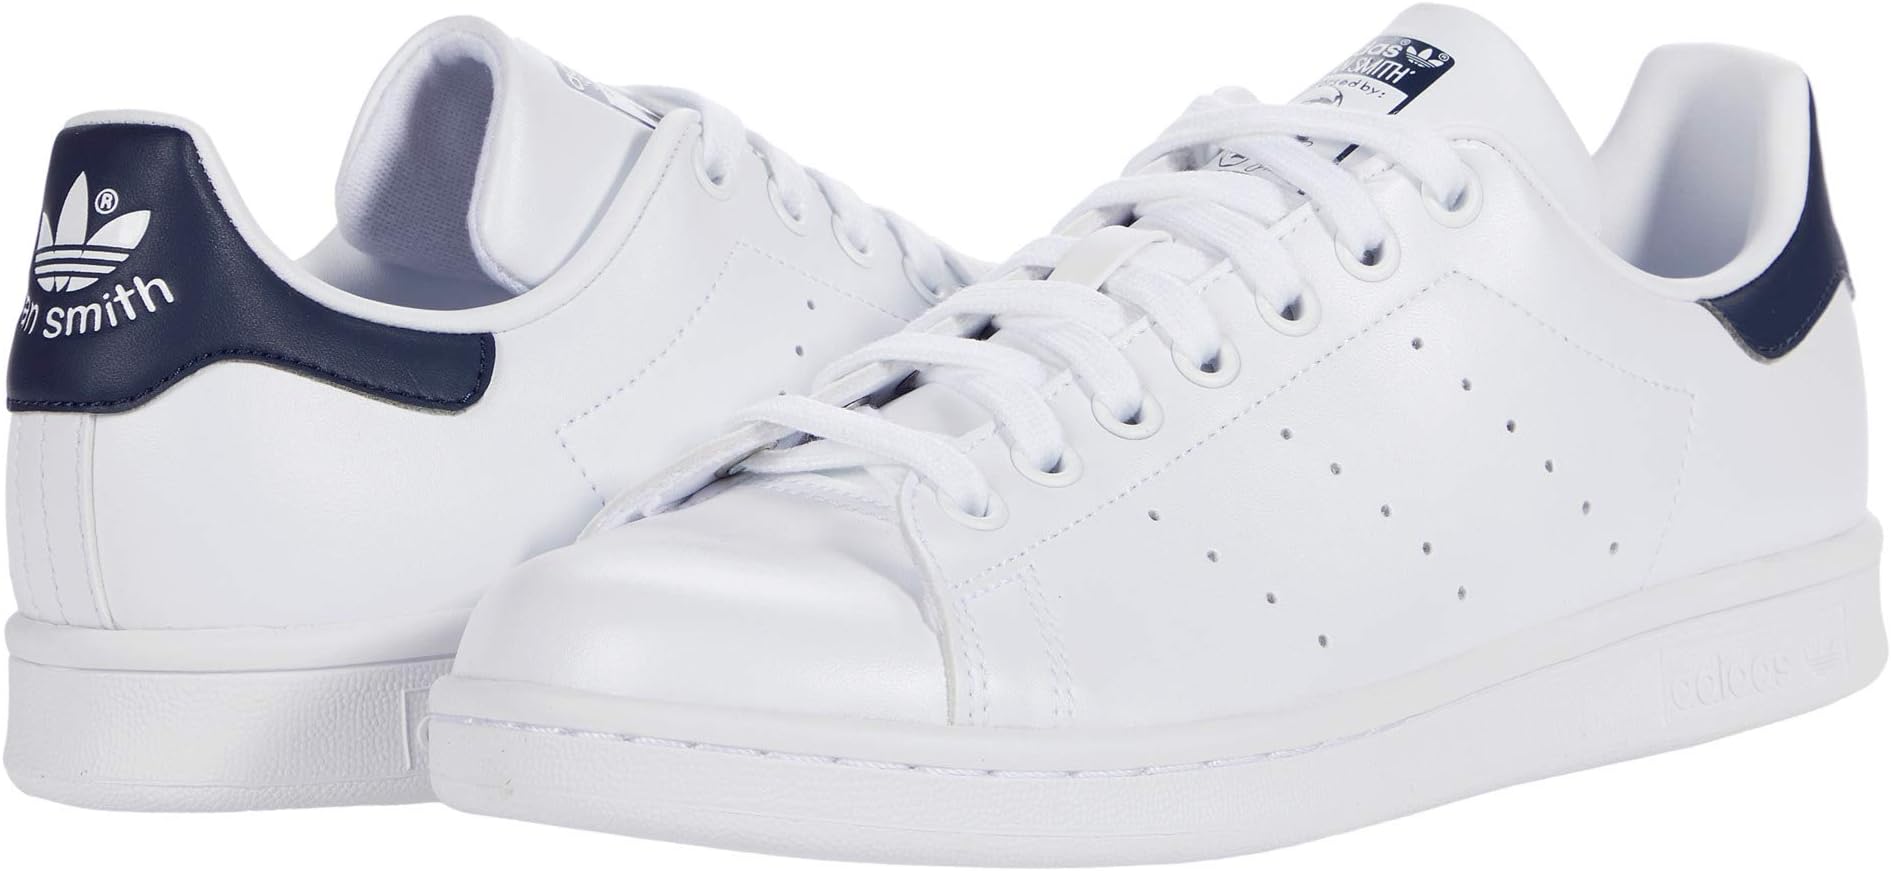 Кроссовки Stan Smith adidas, цвет Footwear White/Collegiate Navy/Footwear White